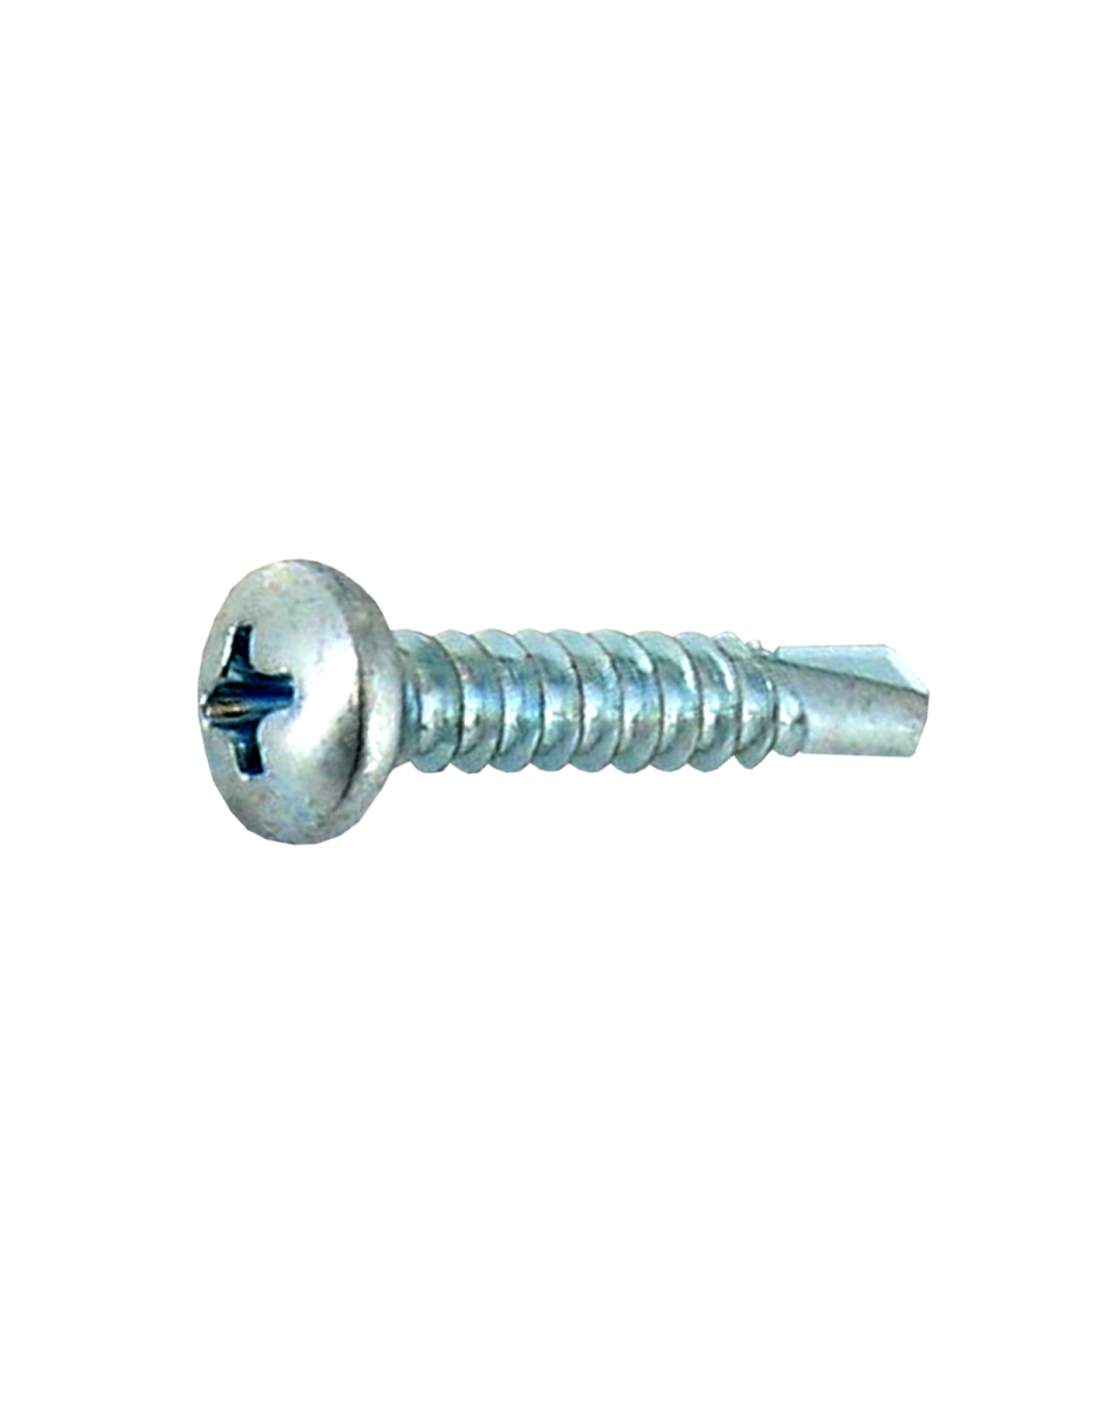 AZI 4.8x38 pan head self-drilling sheet metal screws, 7 pcs.